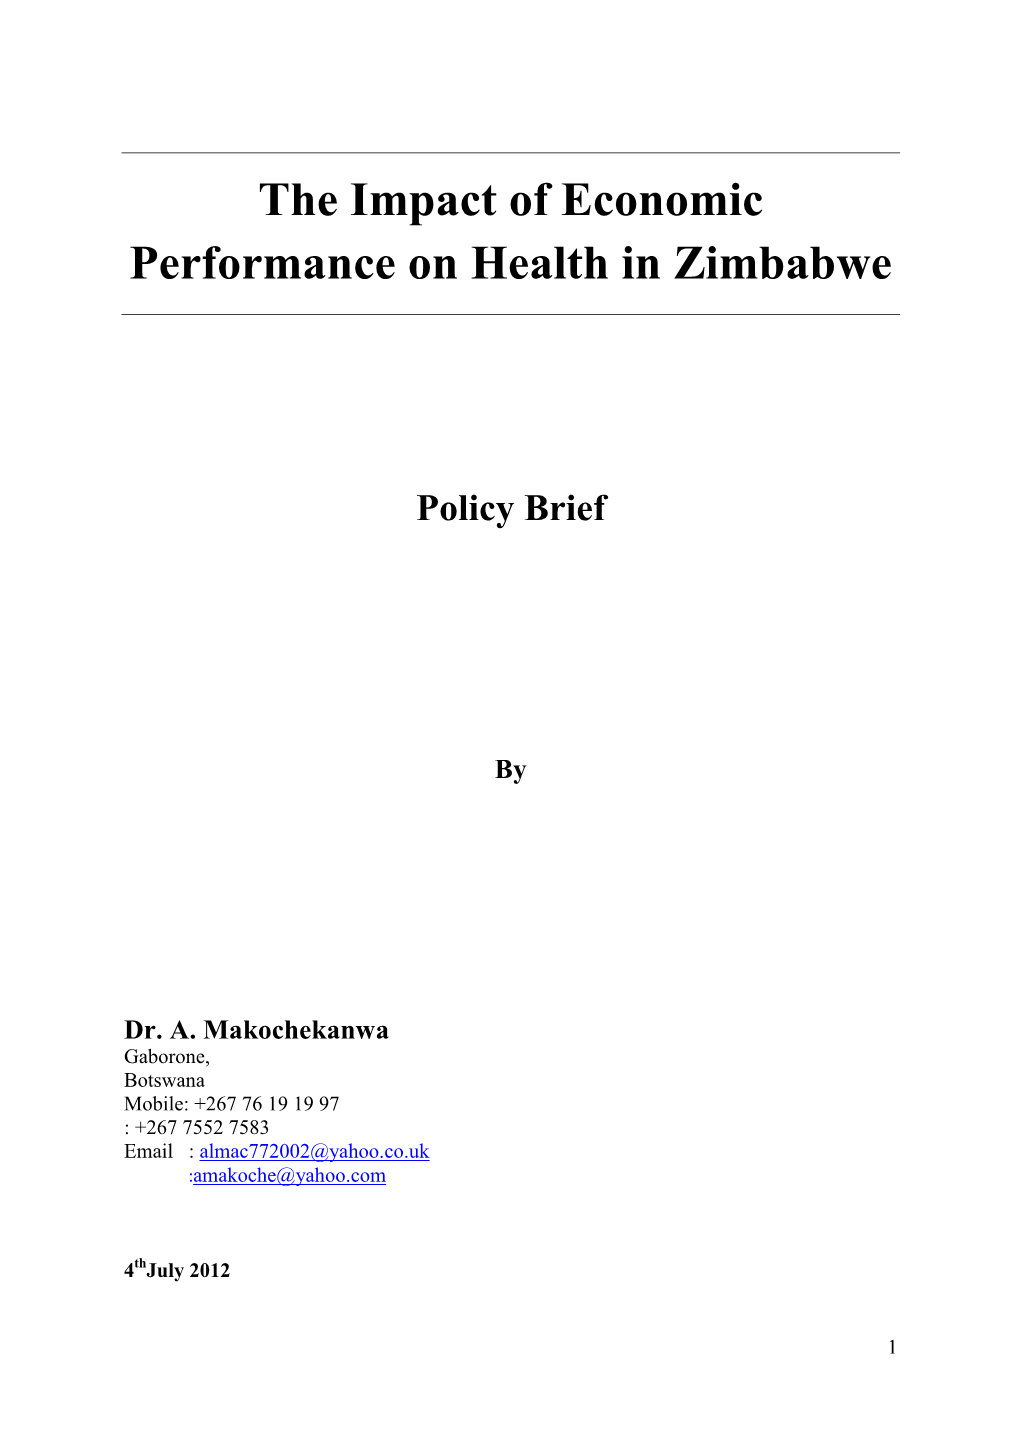 The Impact of Economic Performance on Health in Zimbabwe